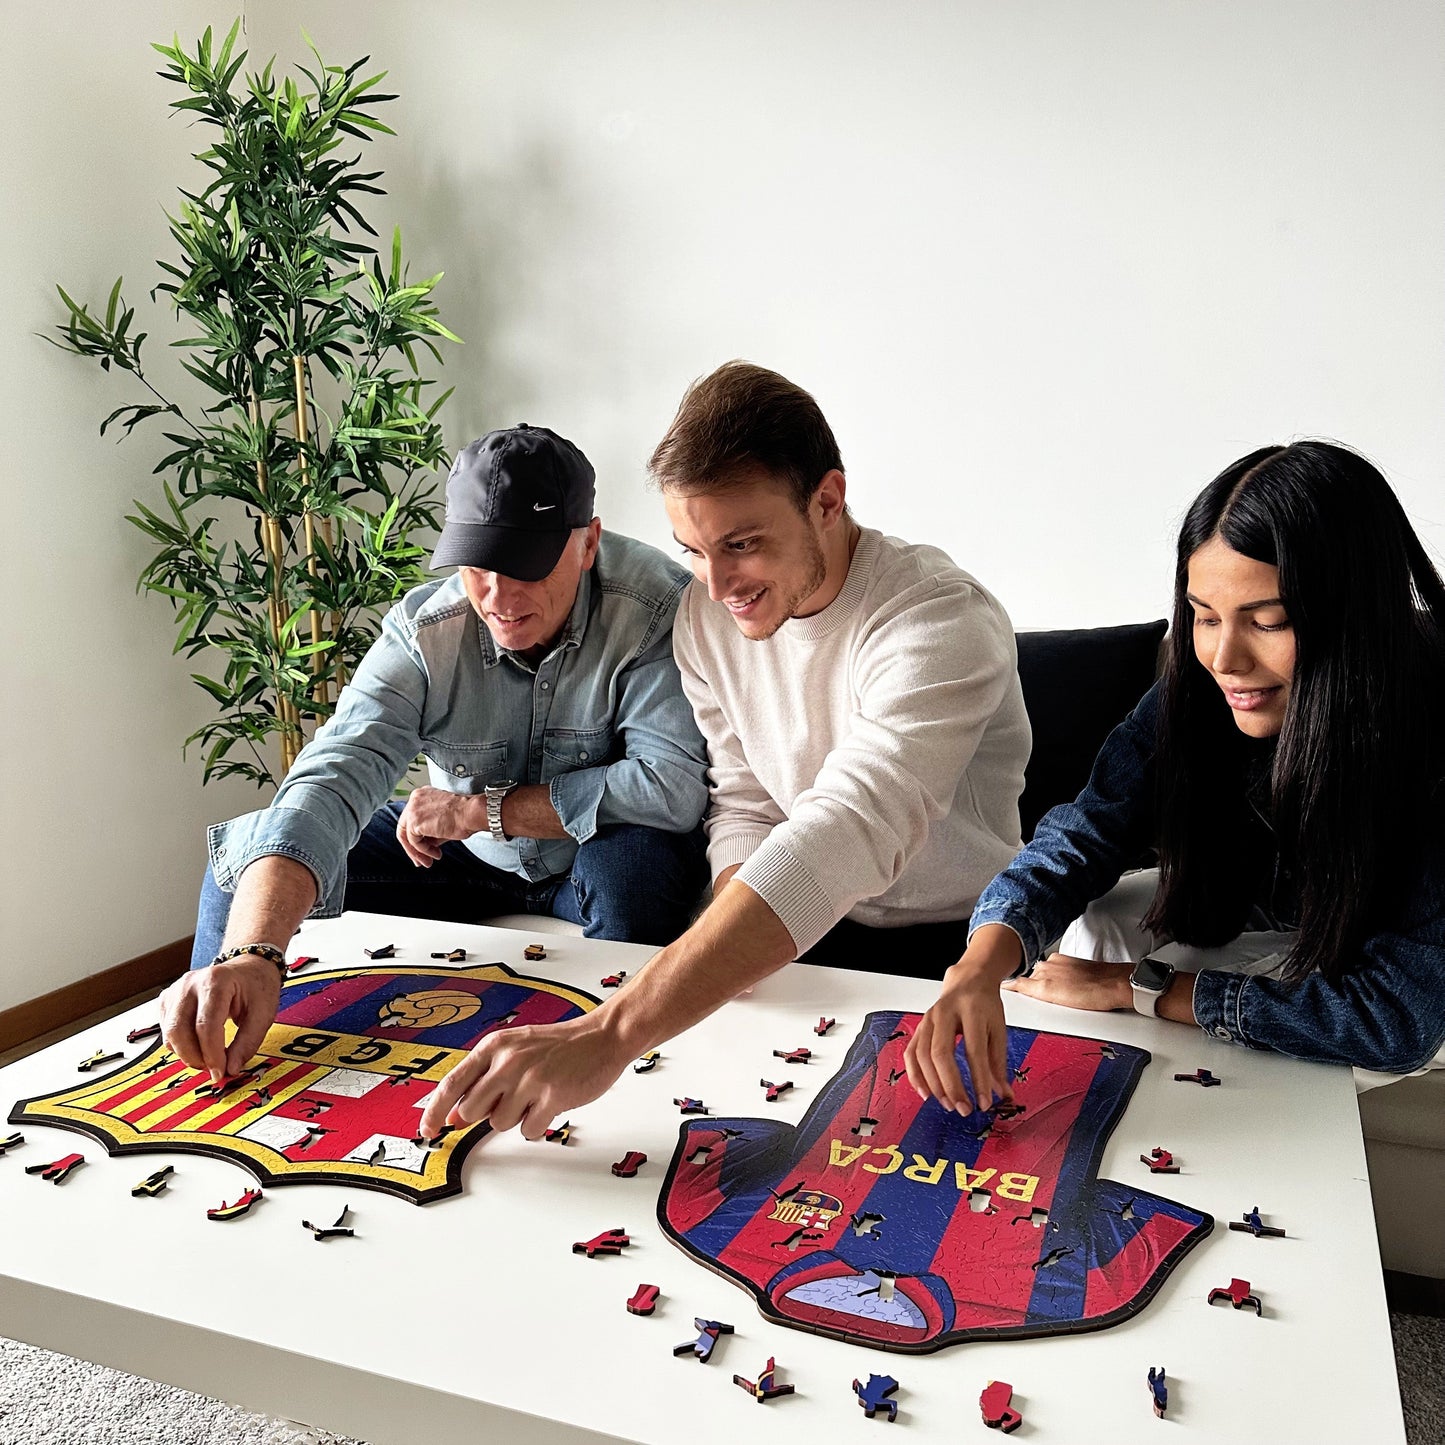 3 PACK FC Barcelona® Crest + Pedri + Lewandowski